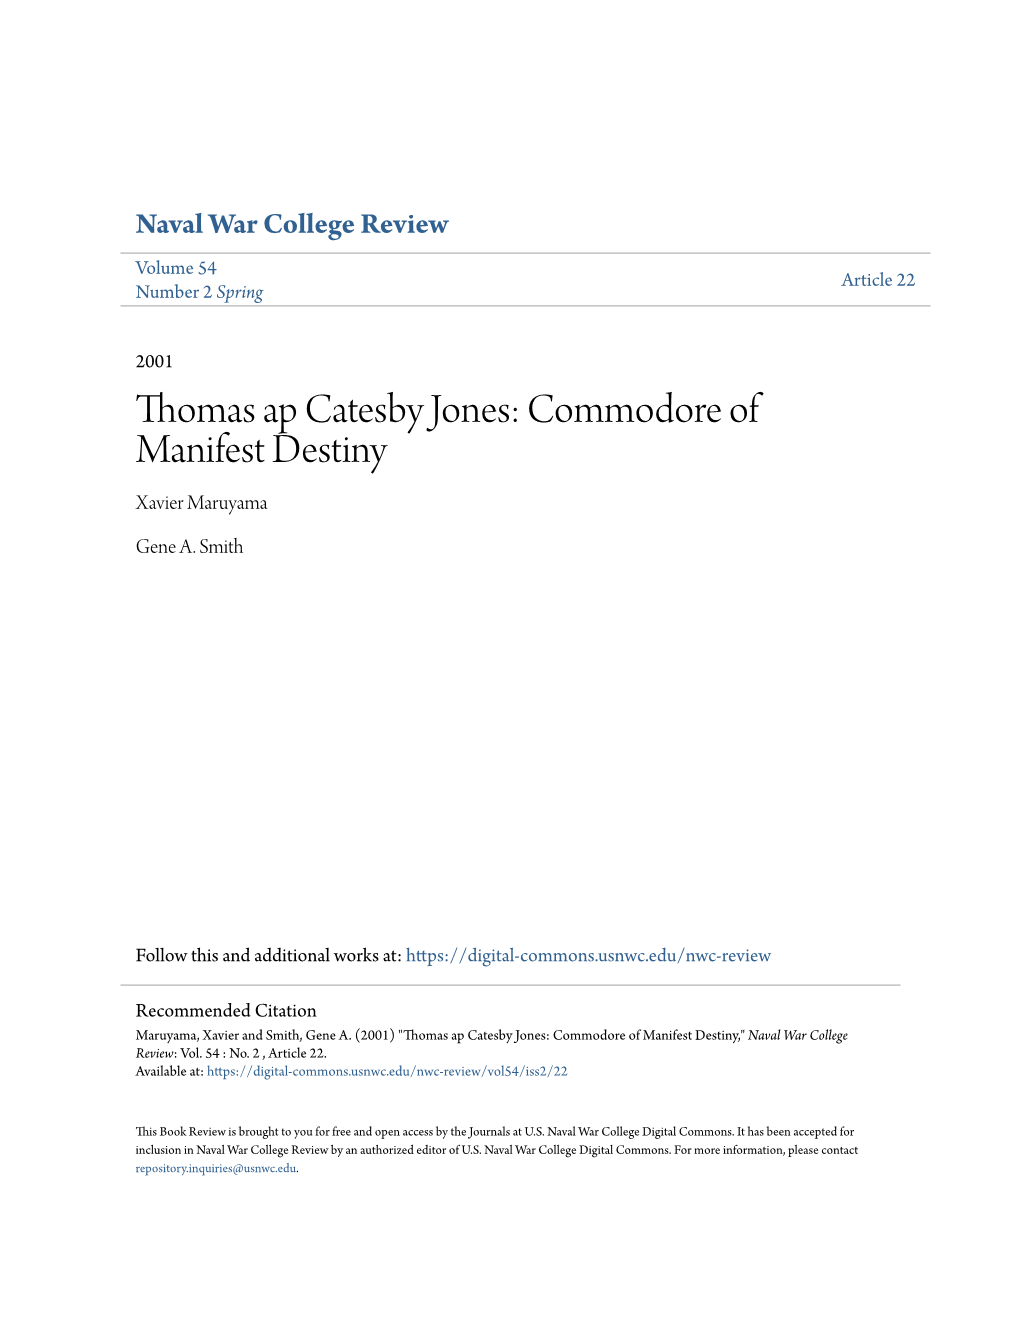 Thomas Ap Catesby Jones: Commodore of Manifest Destiny Xavier Maruyama